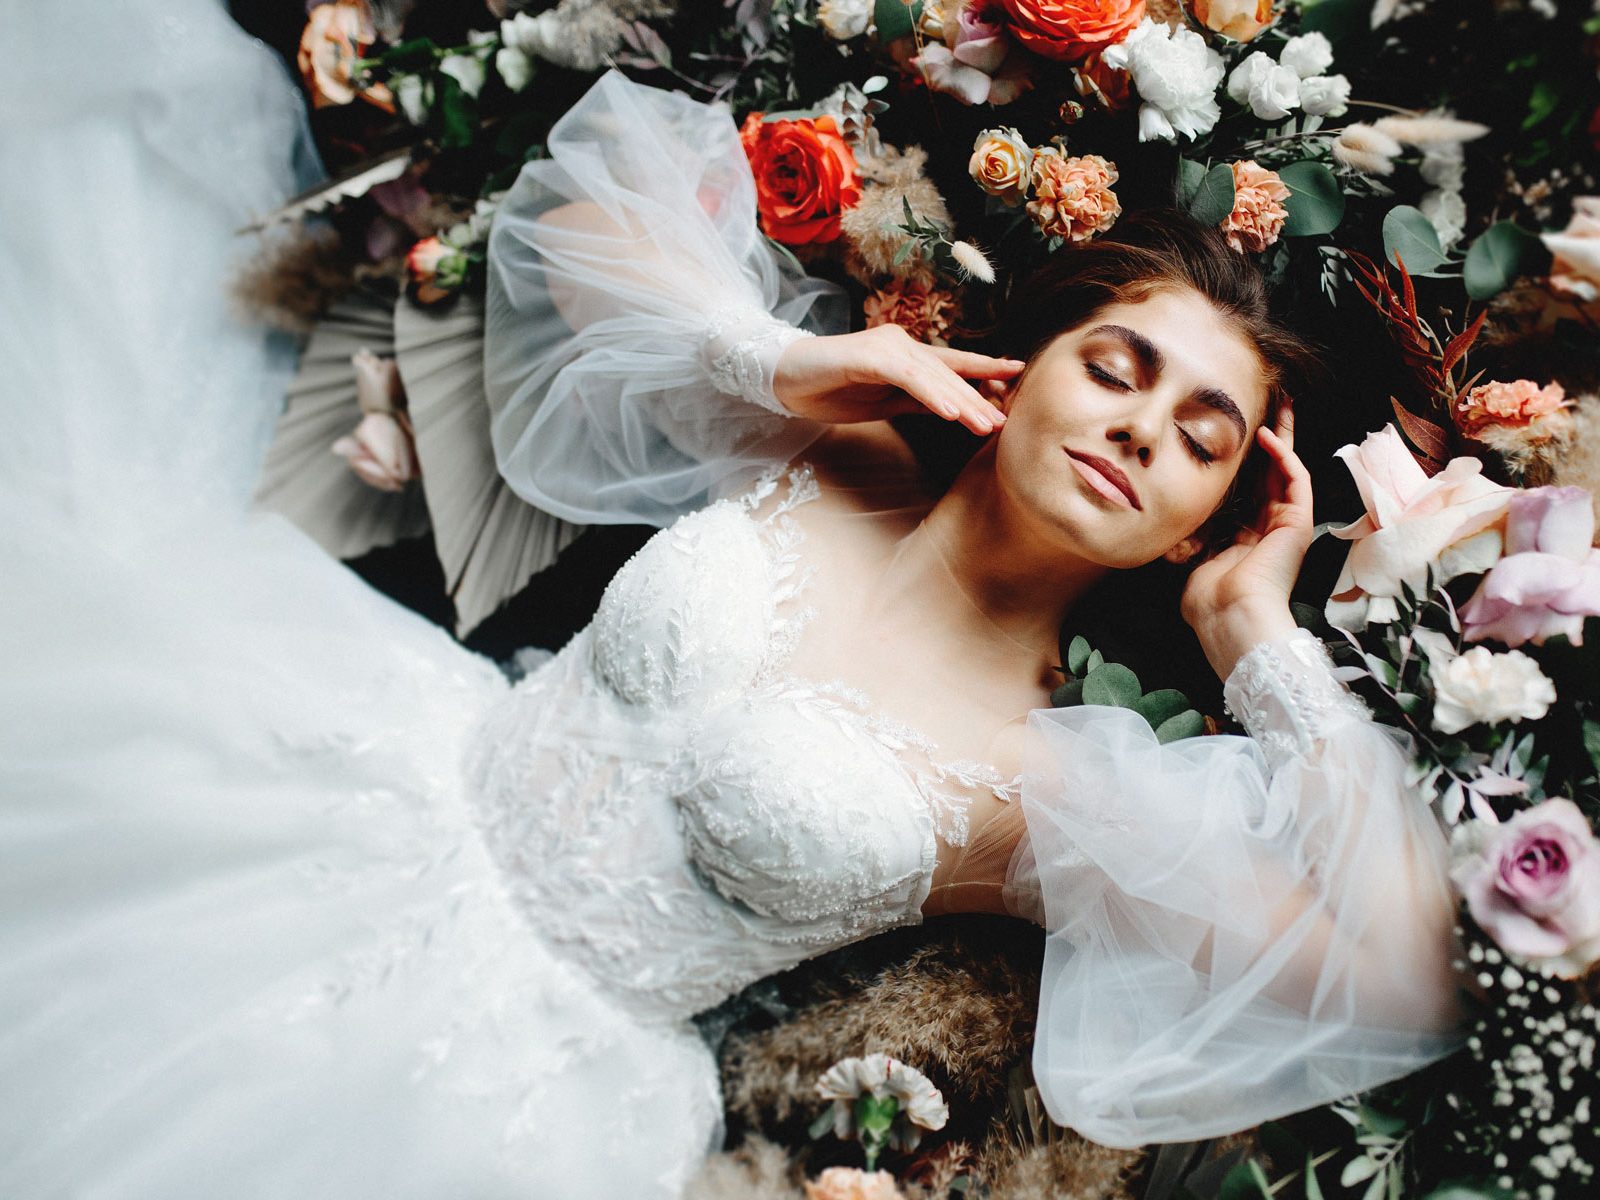 Beautiful bride lies on the floor in flowers in a wedding dress